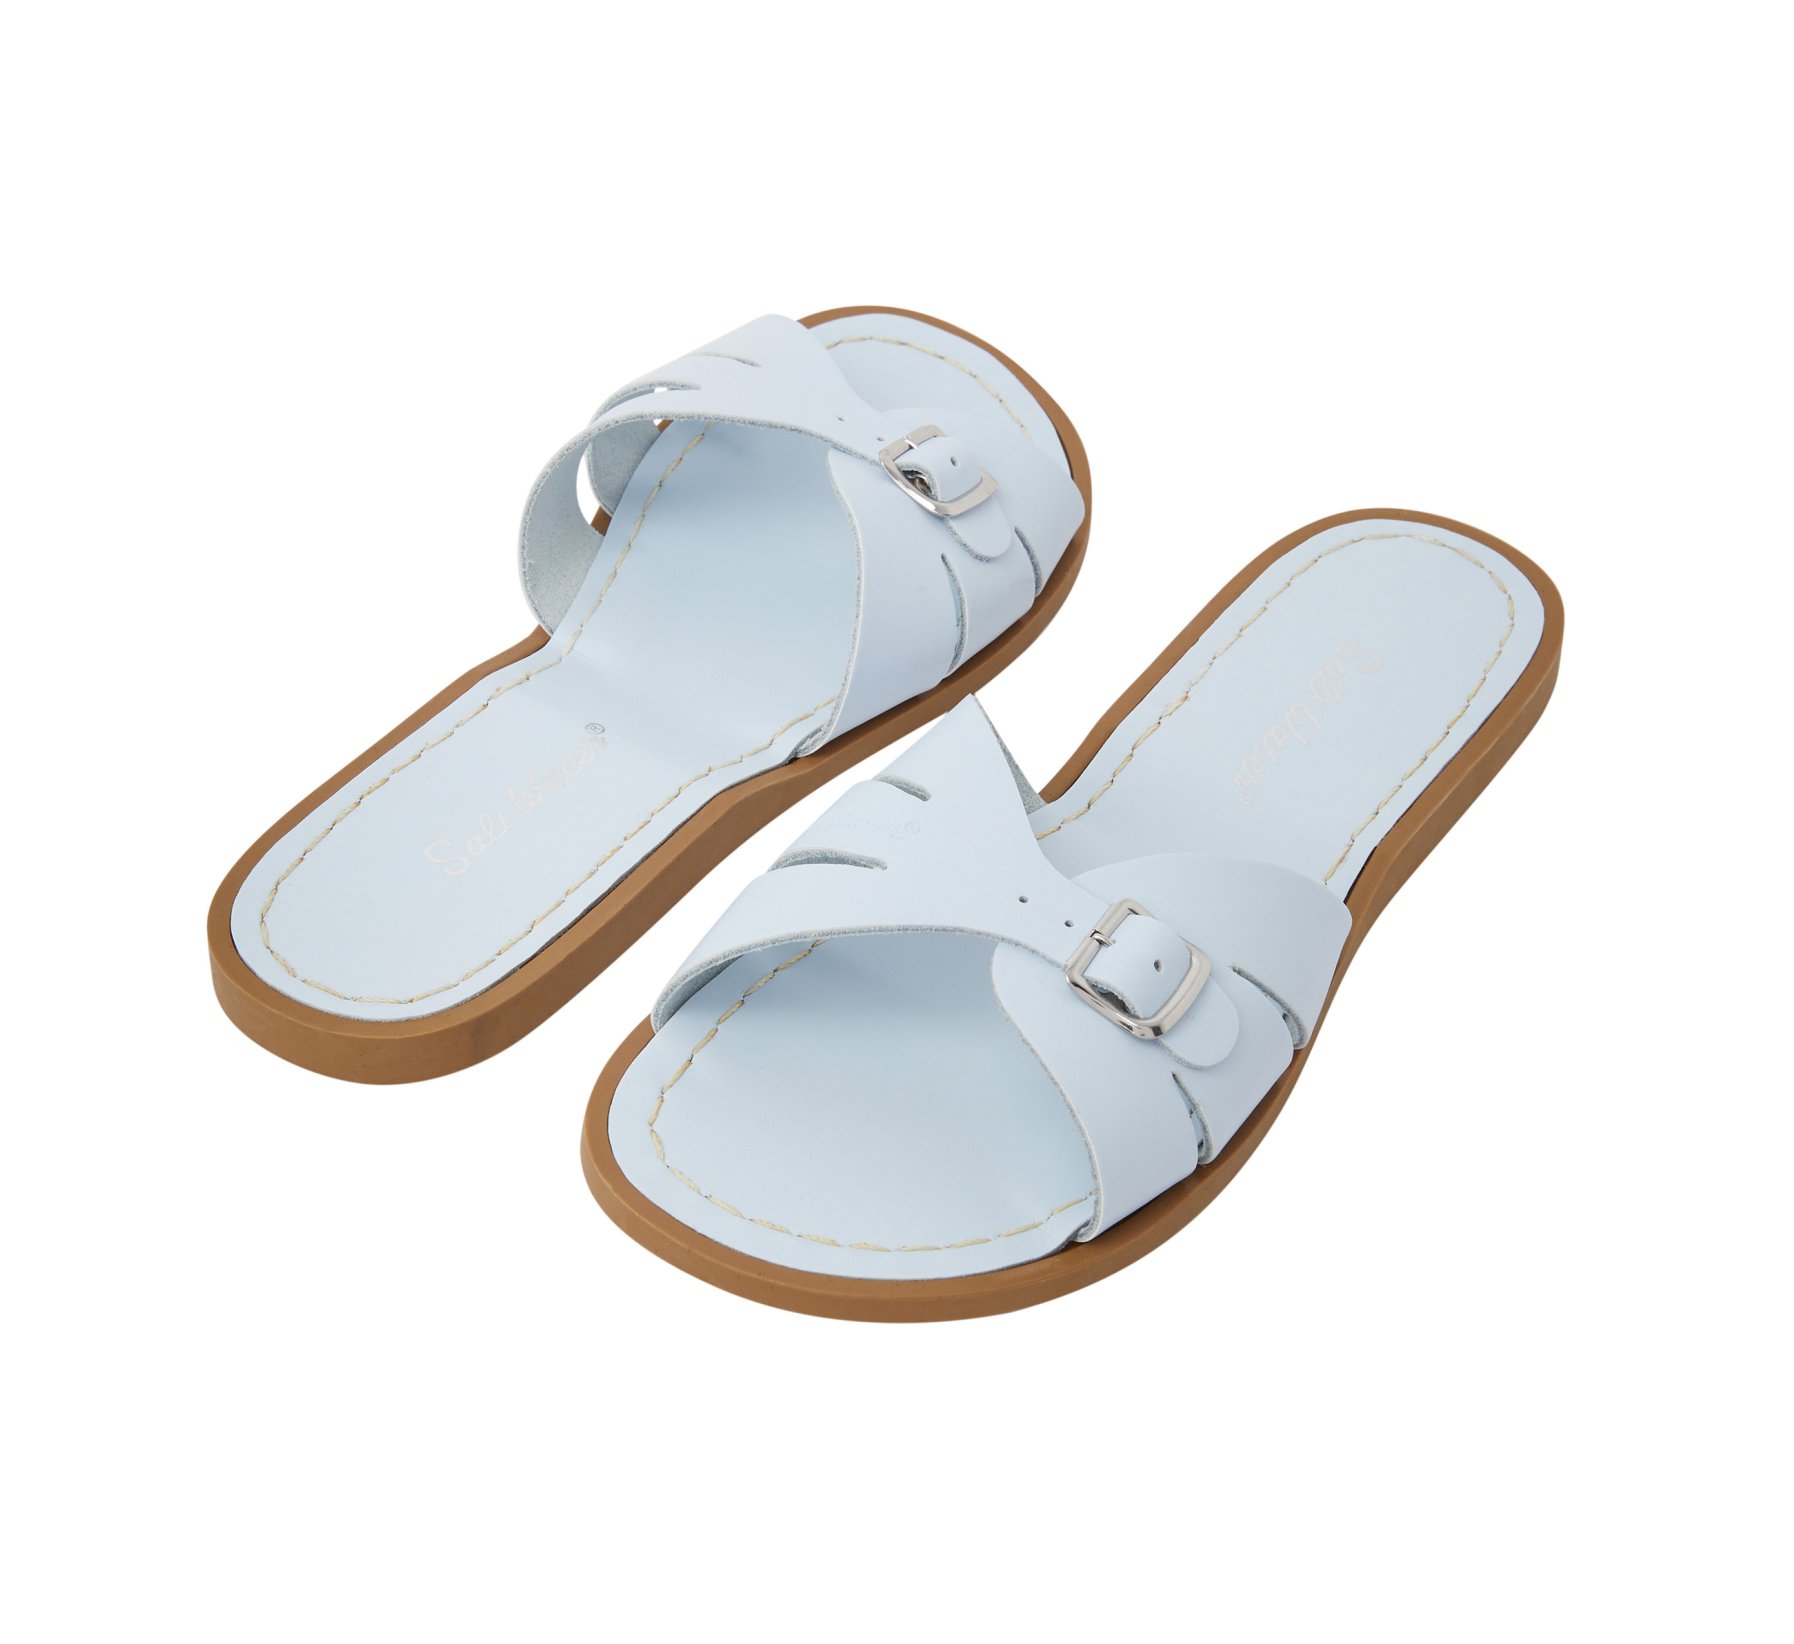 Classic Slide Damen Sandalen Hellblau - Salt Water Sandals